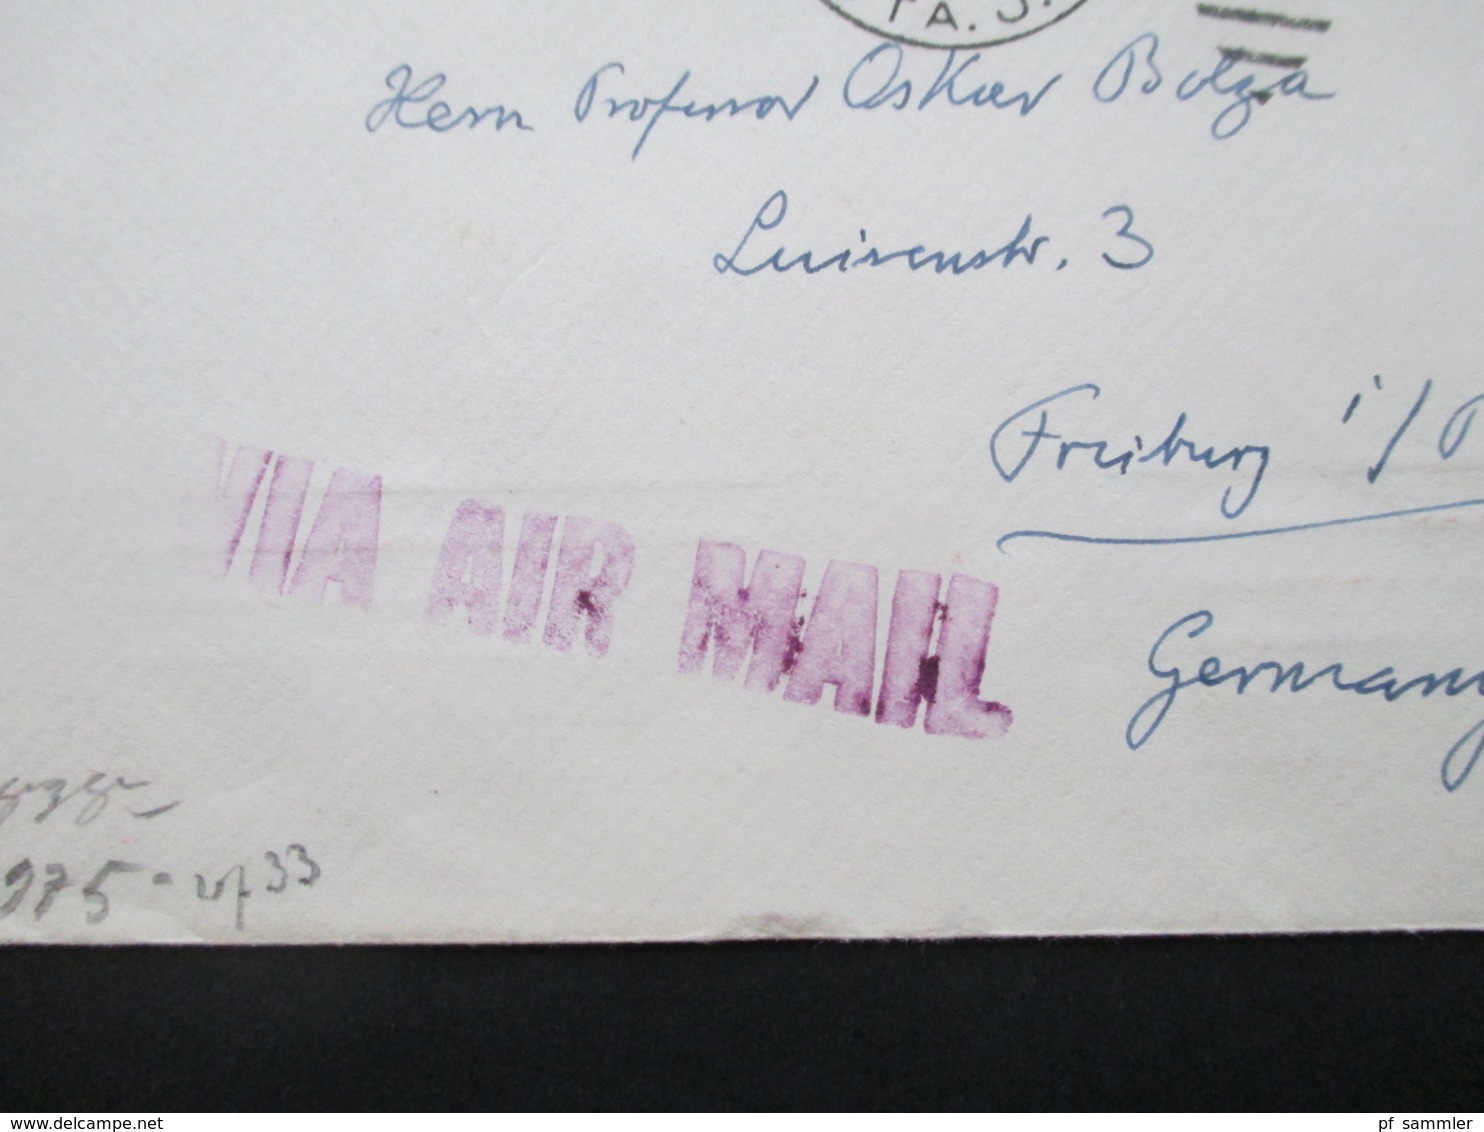 USA 1941 Zensurbeleg Mehrfachzensur OKW Air Mail Per Clipper Trans Atlantic Social Philately Dr.Oskar Bolza Mathematiker - Cartas & Documentos